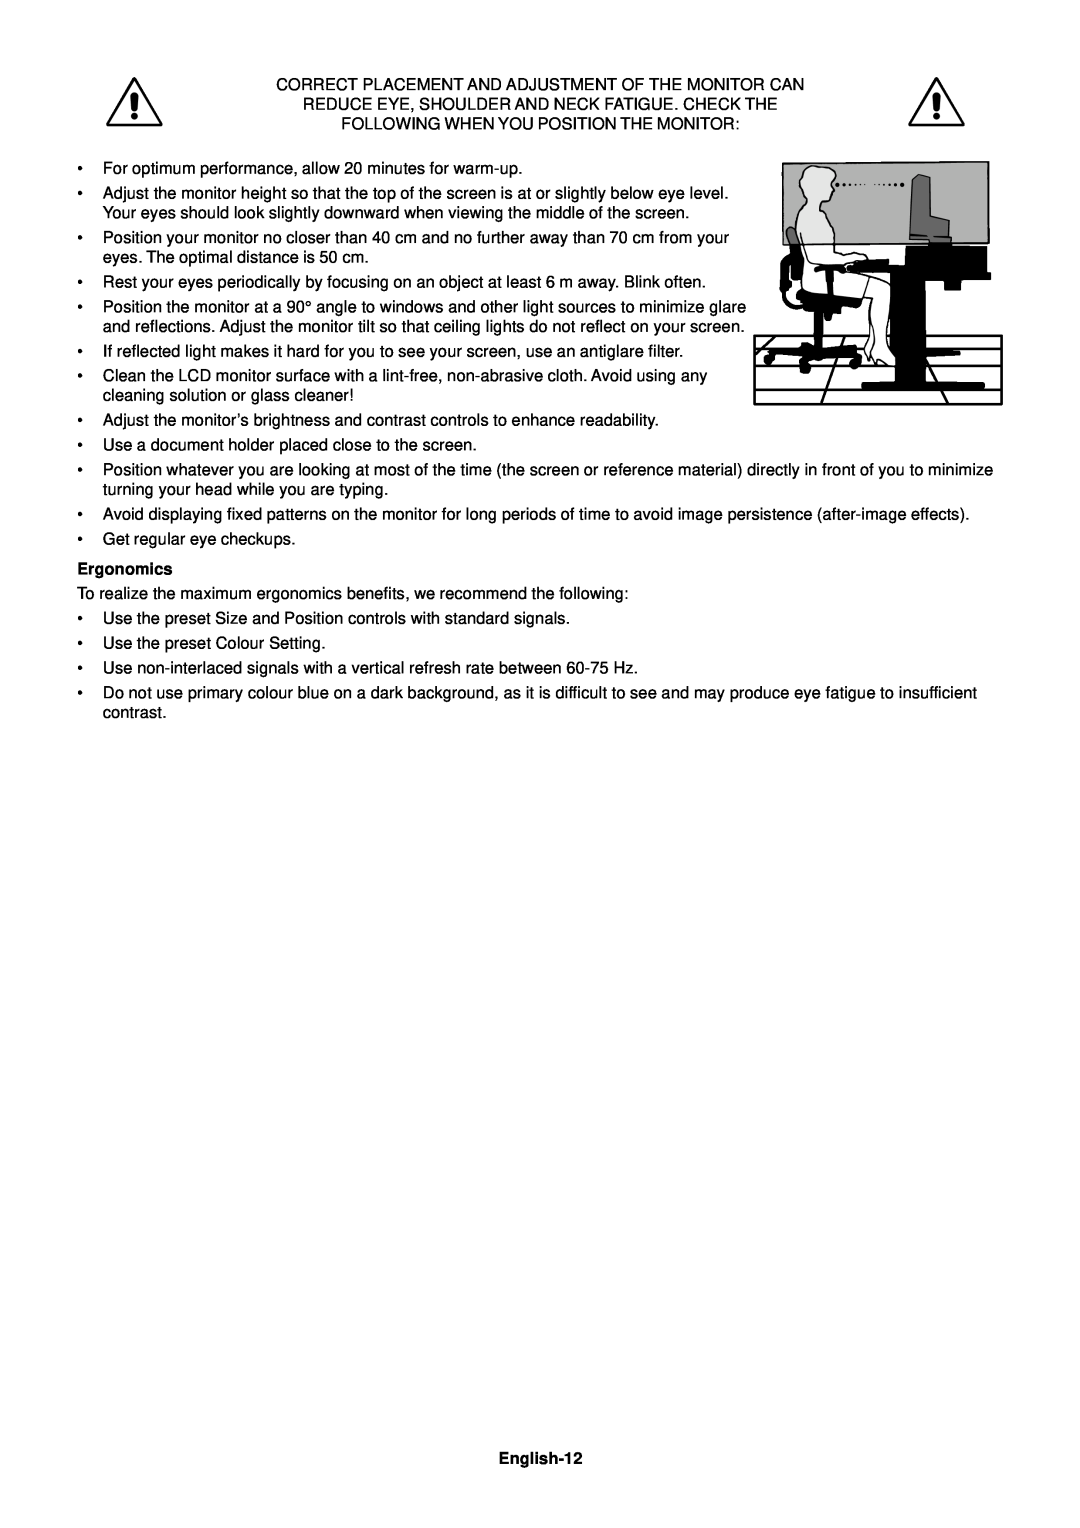 Mitsubishi Electronics LCD1760VM user manual Ergonomics, English-12 